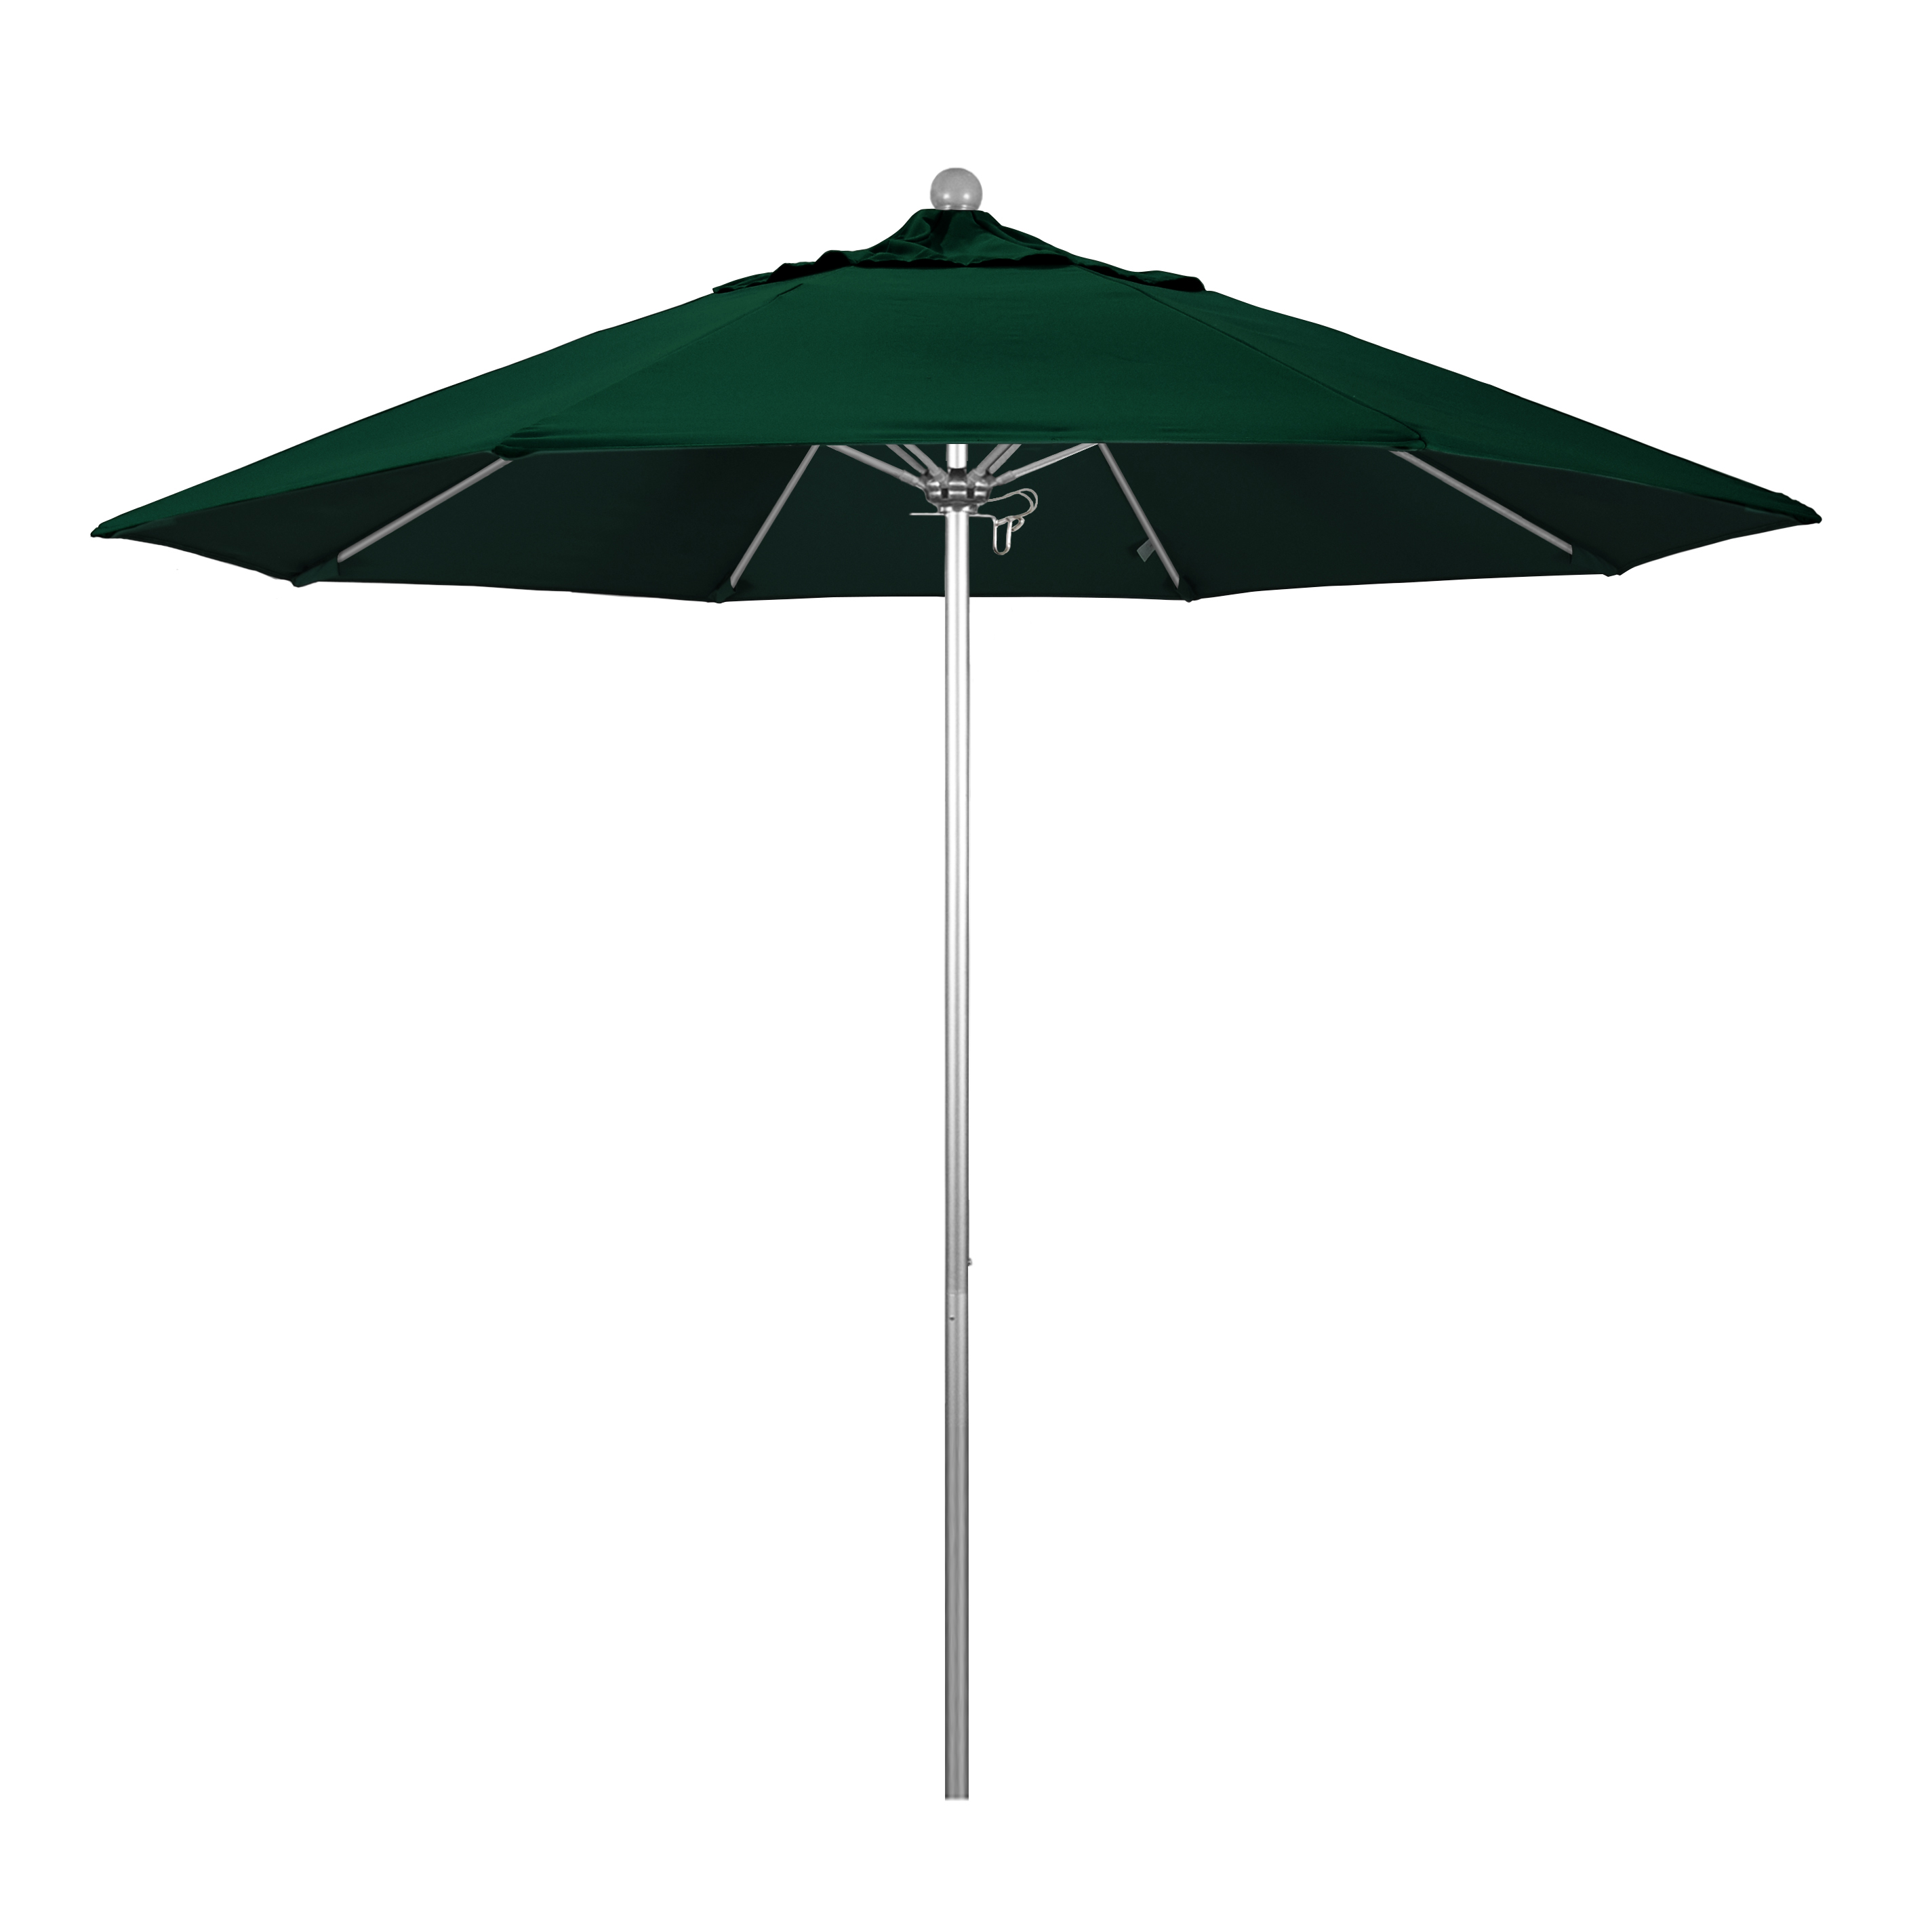 California Umbrella ALTO908002-5446 9 ft. Fiberglass Market Umbrella Pulley Open S Anodized-Sunbrella-Forest Green